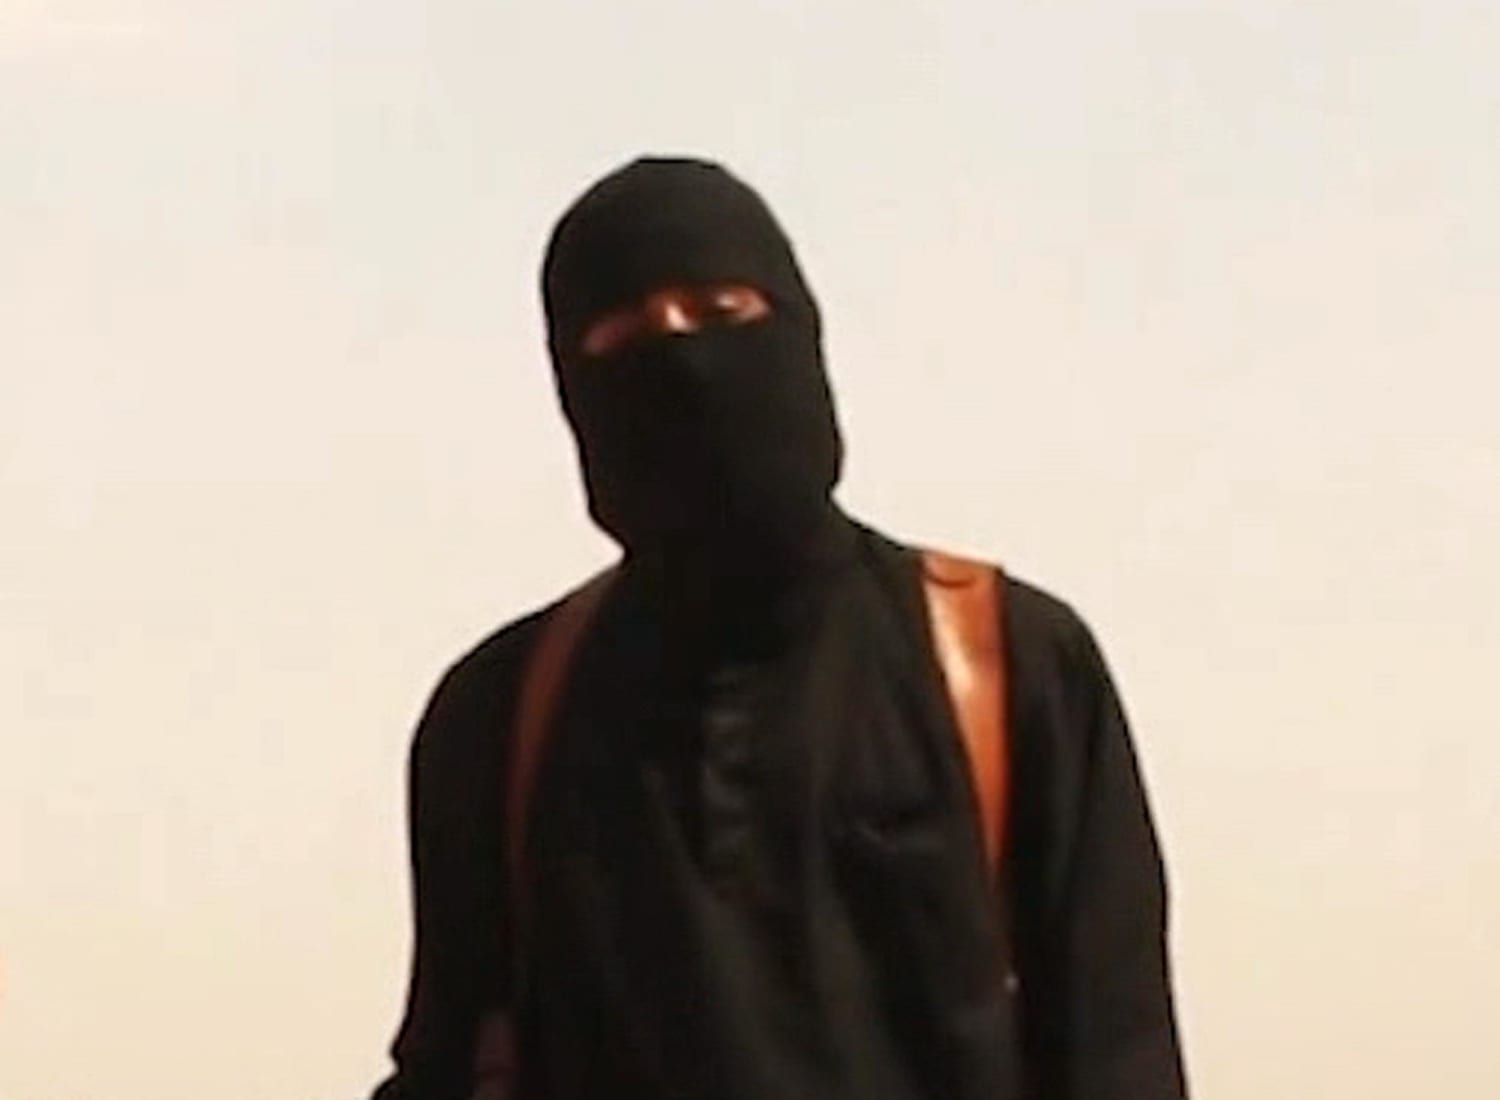 Jihadi John Latest Terrorist to Come From West London.